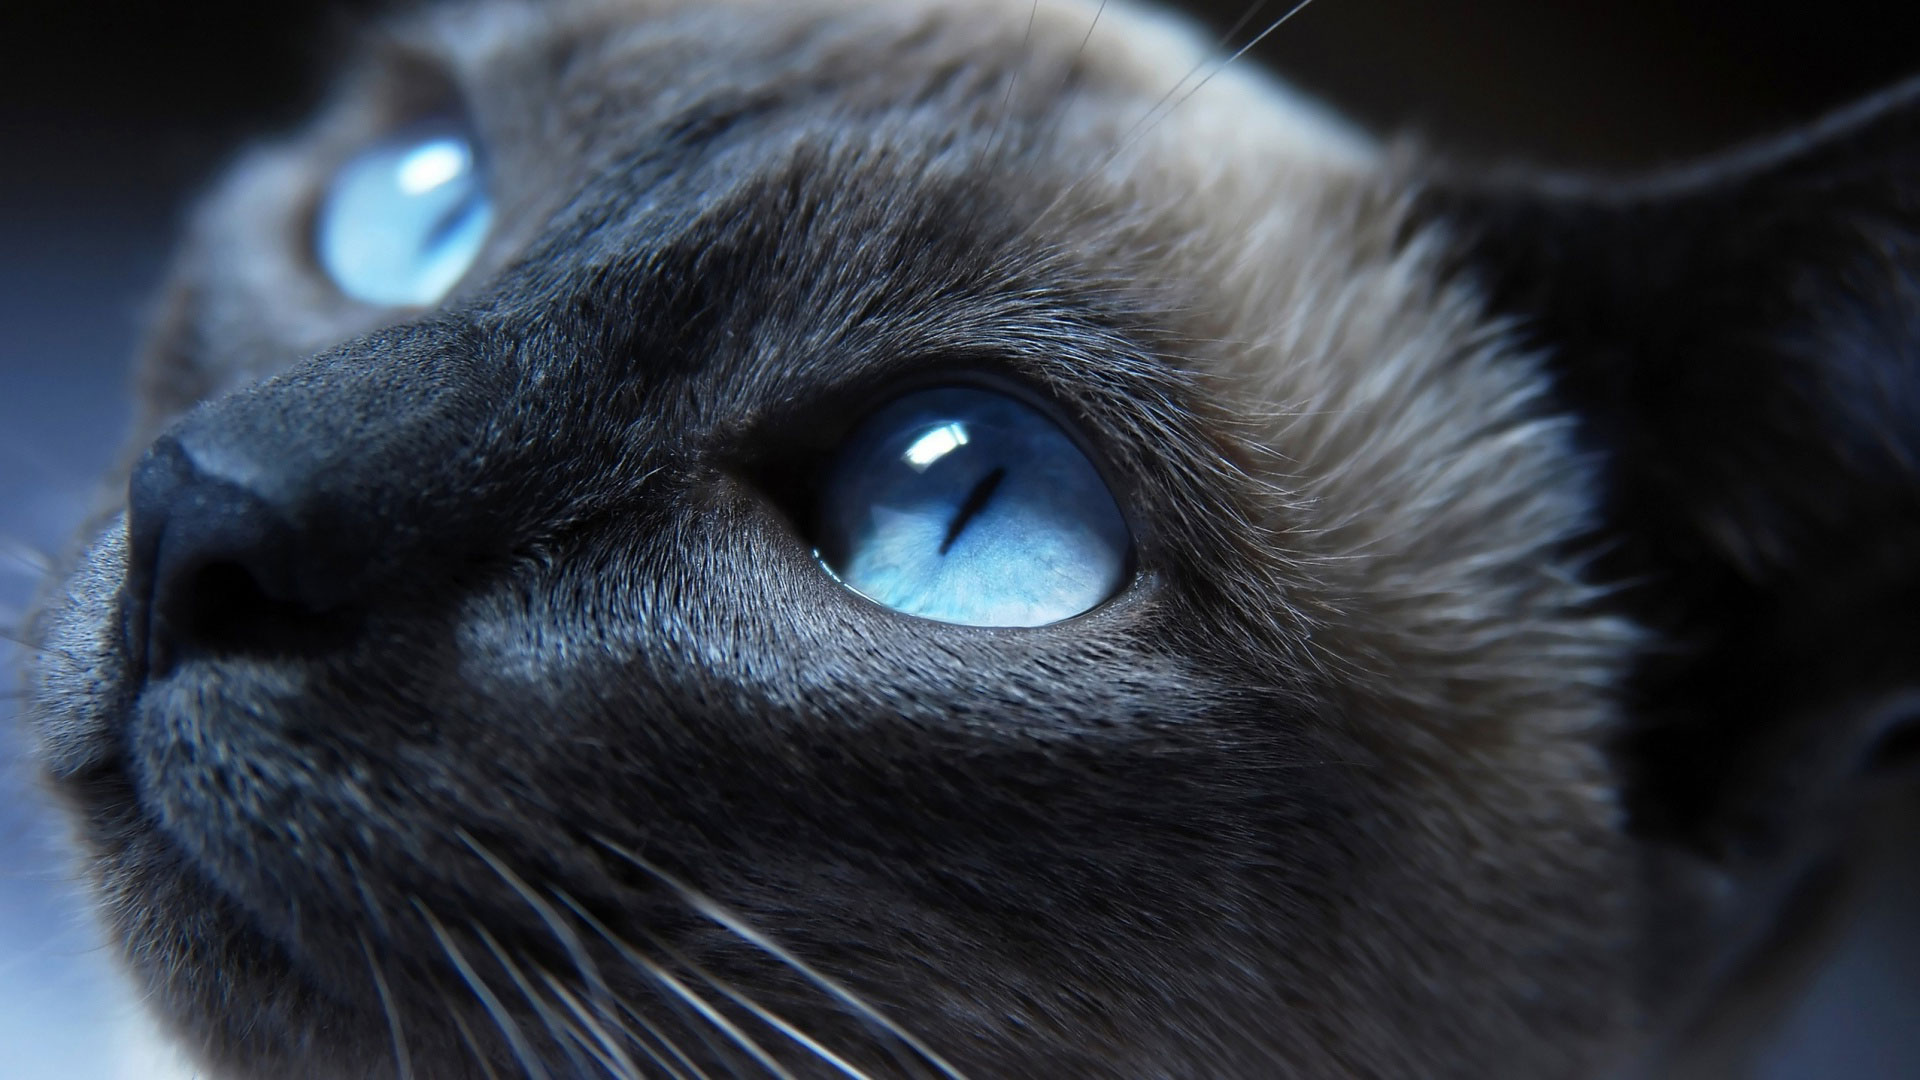 Фото Сиамского Кота С Голубыми